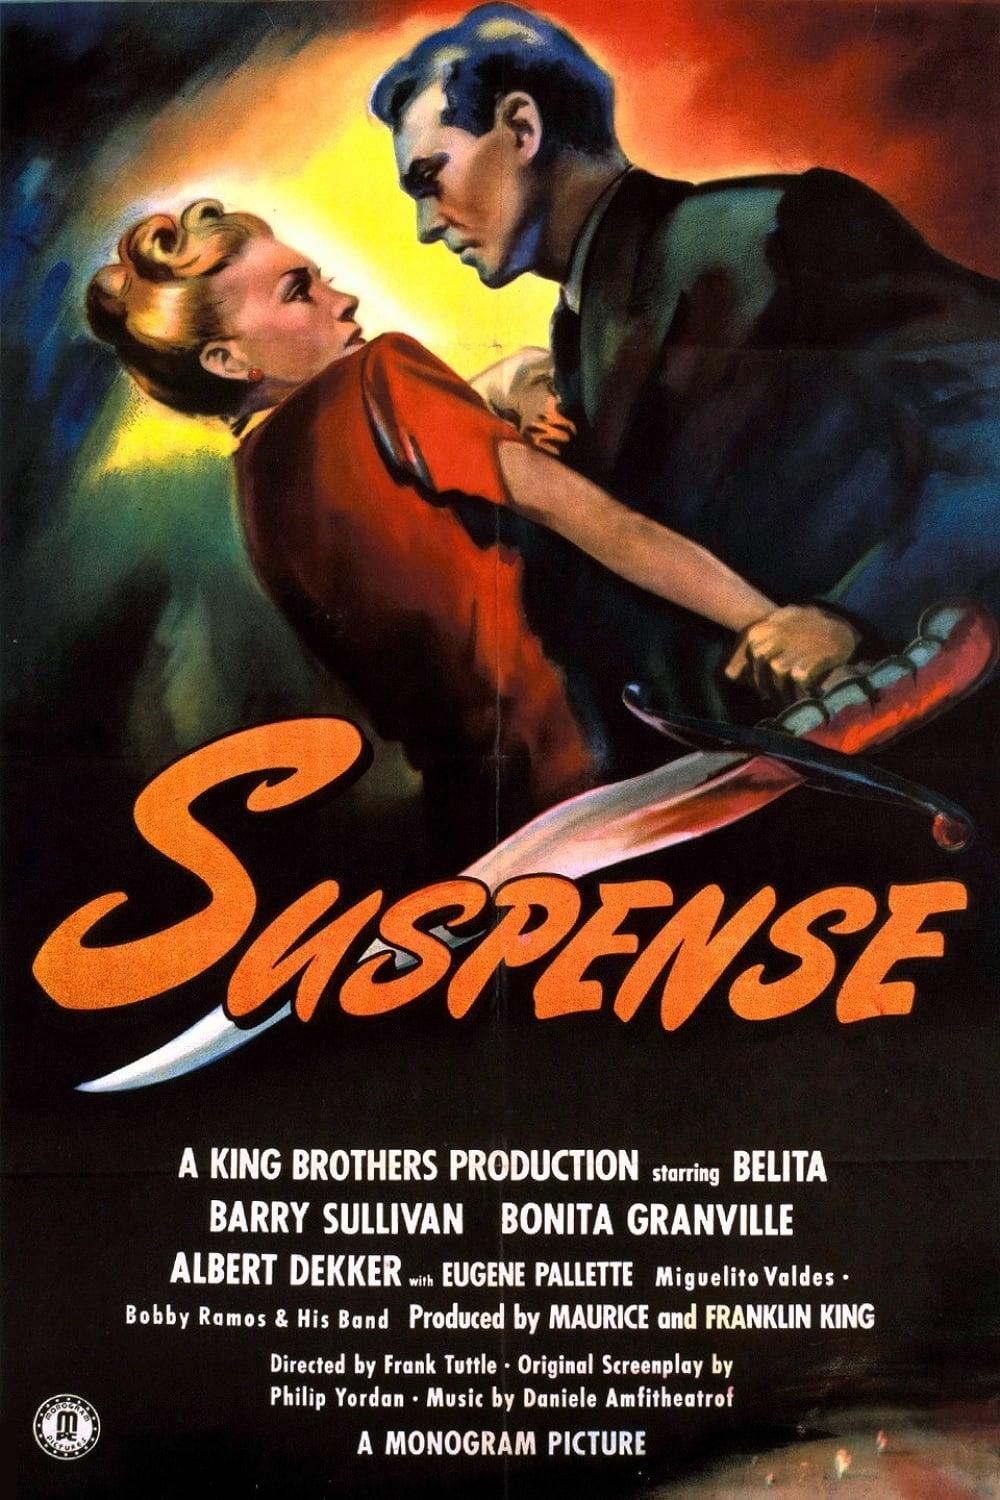 Suspense poster